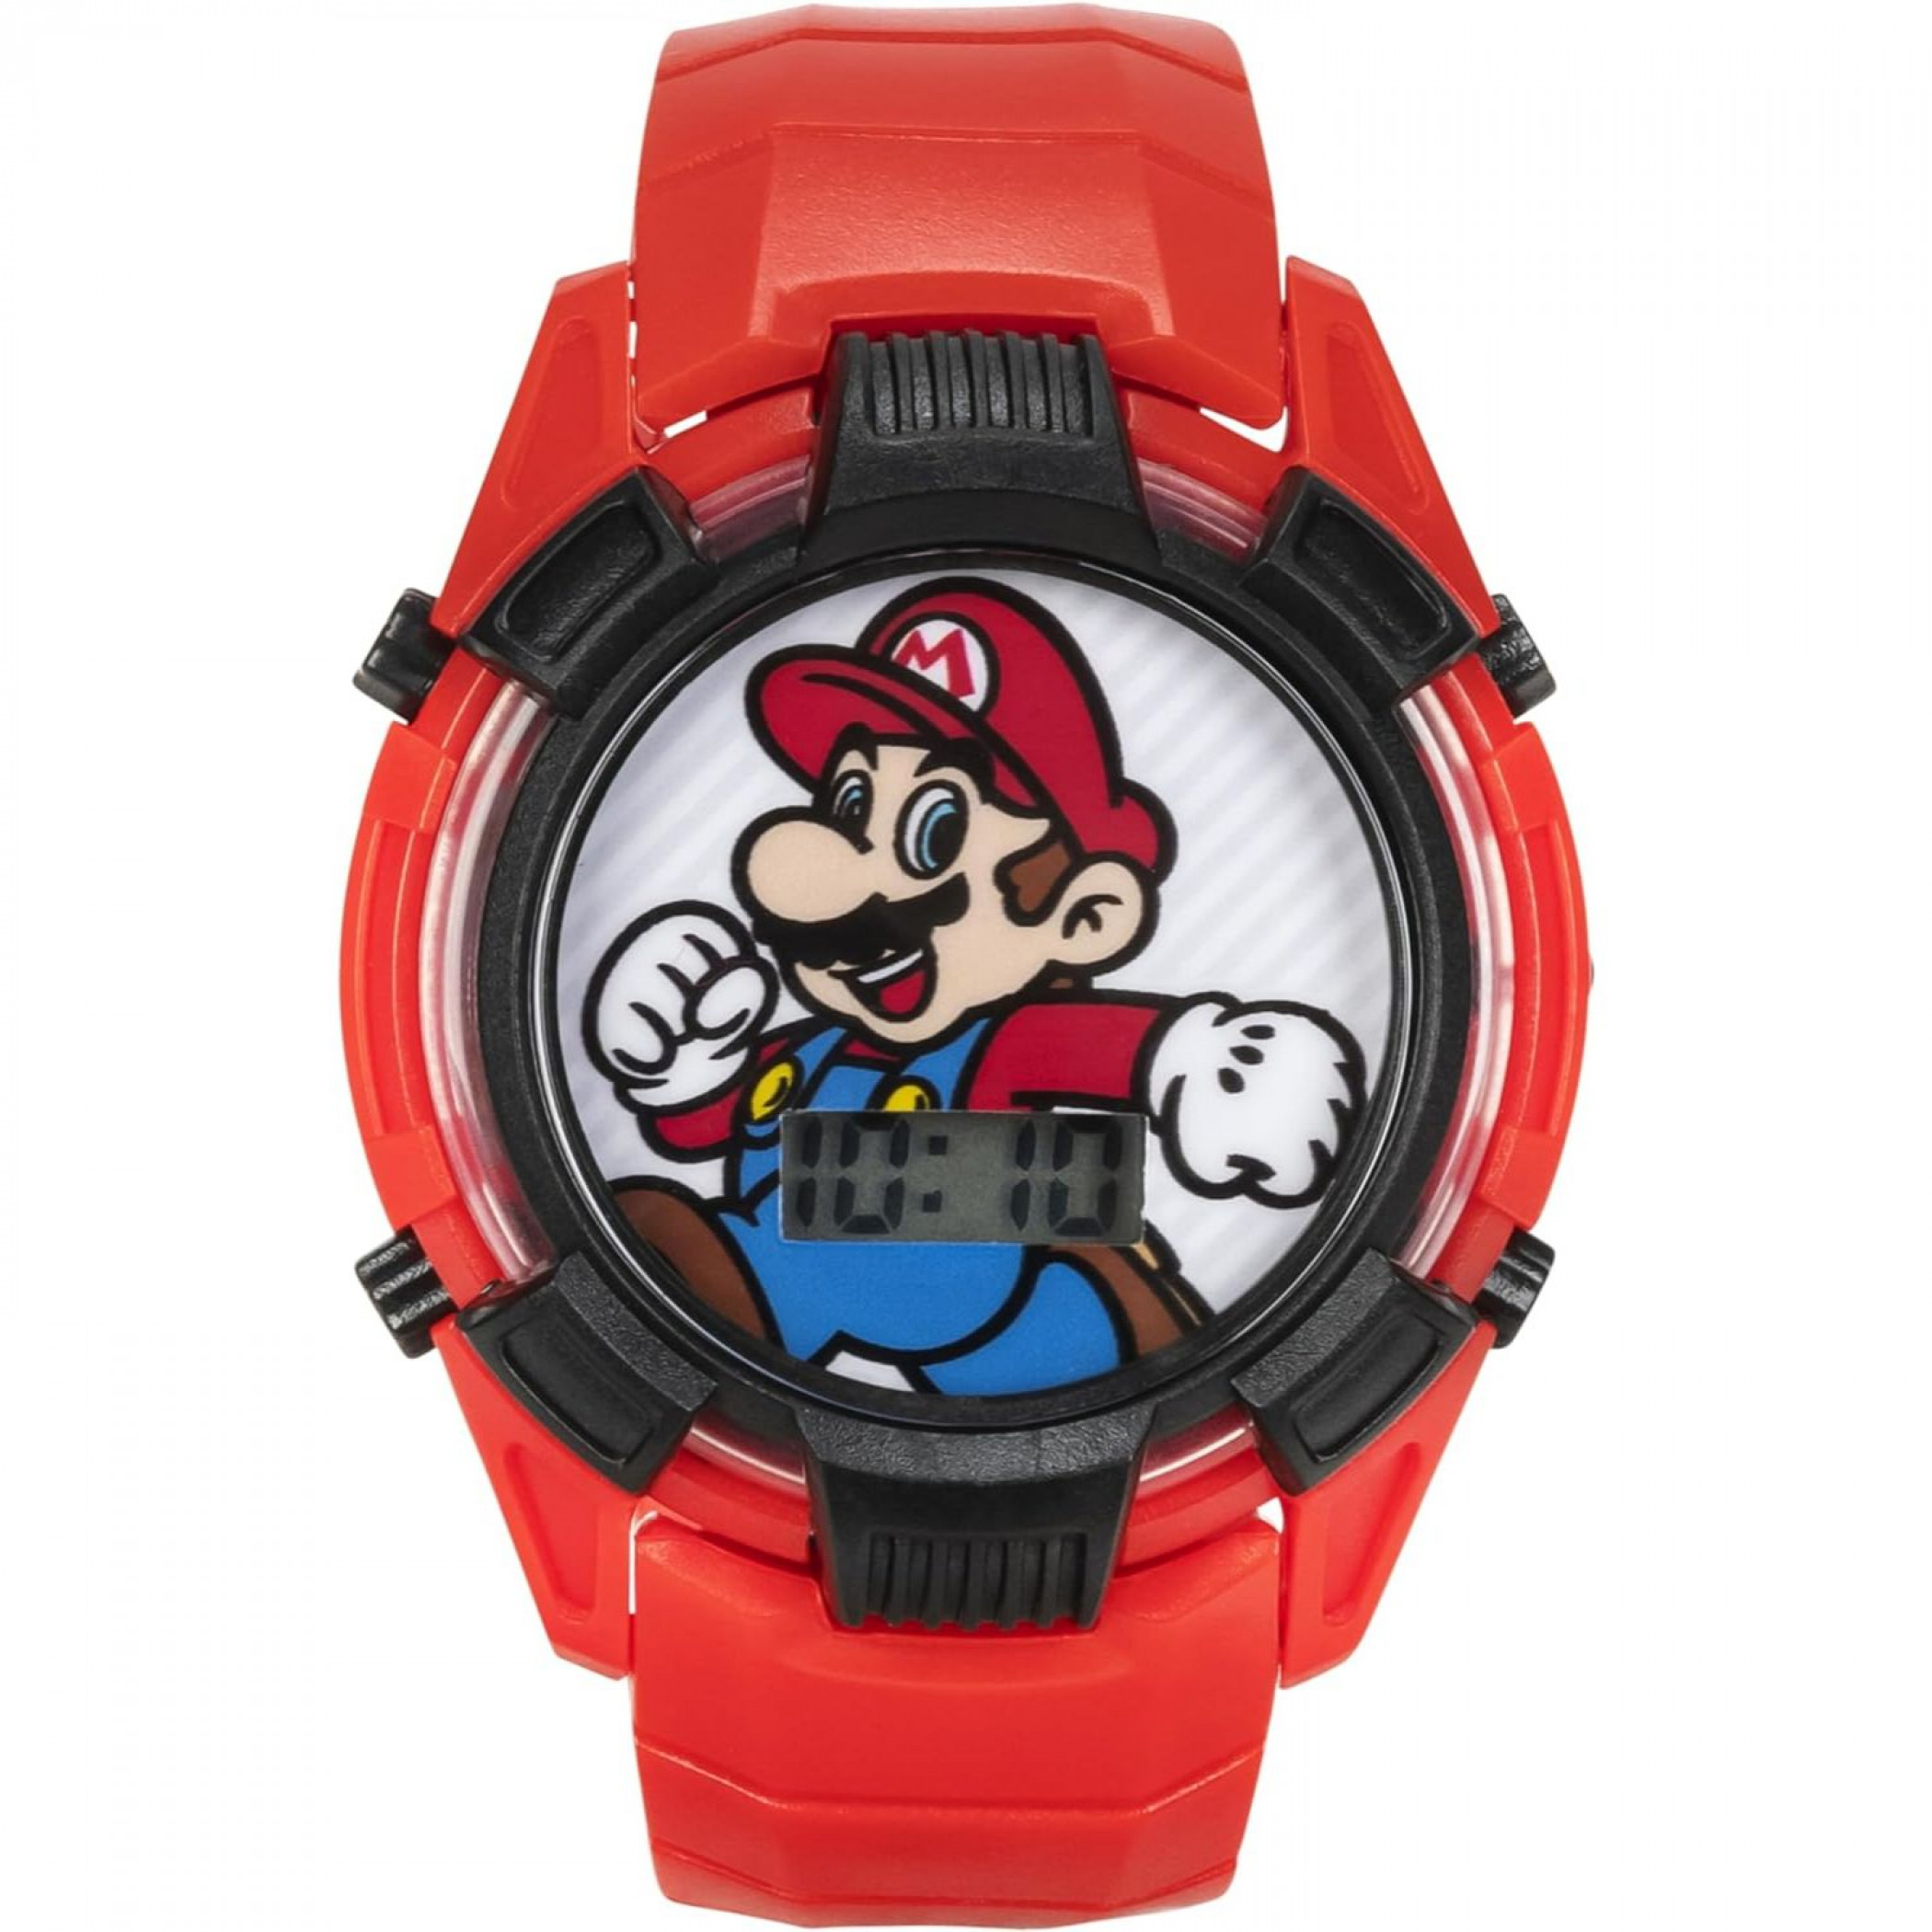 Super Mario Bros. Jump Digital Flashing LCD Kid's Watch